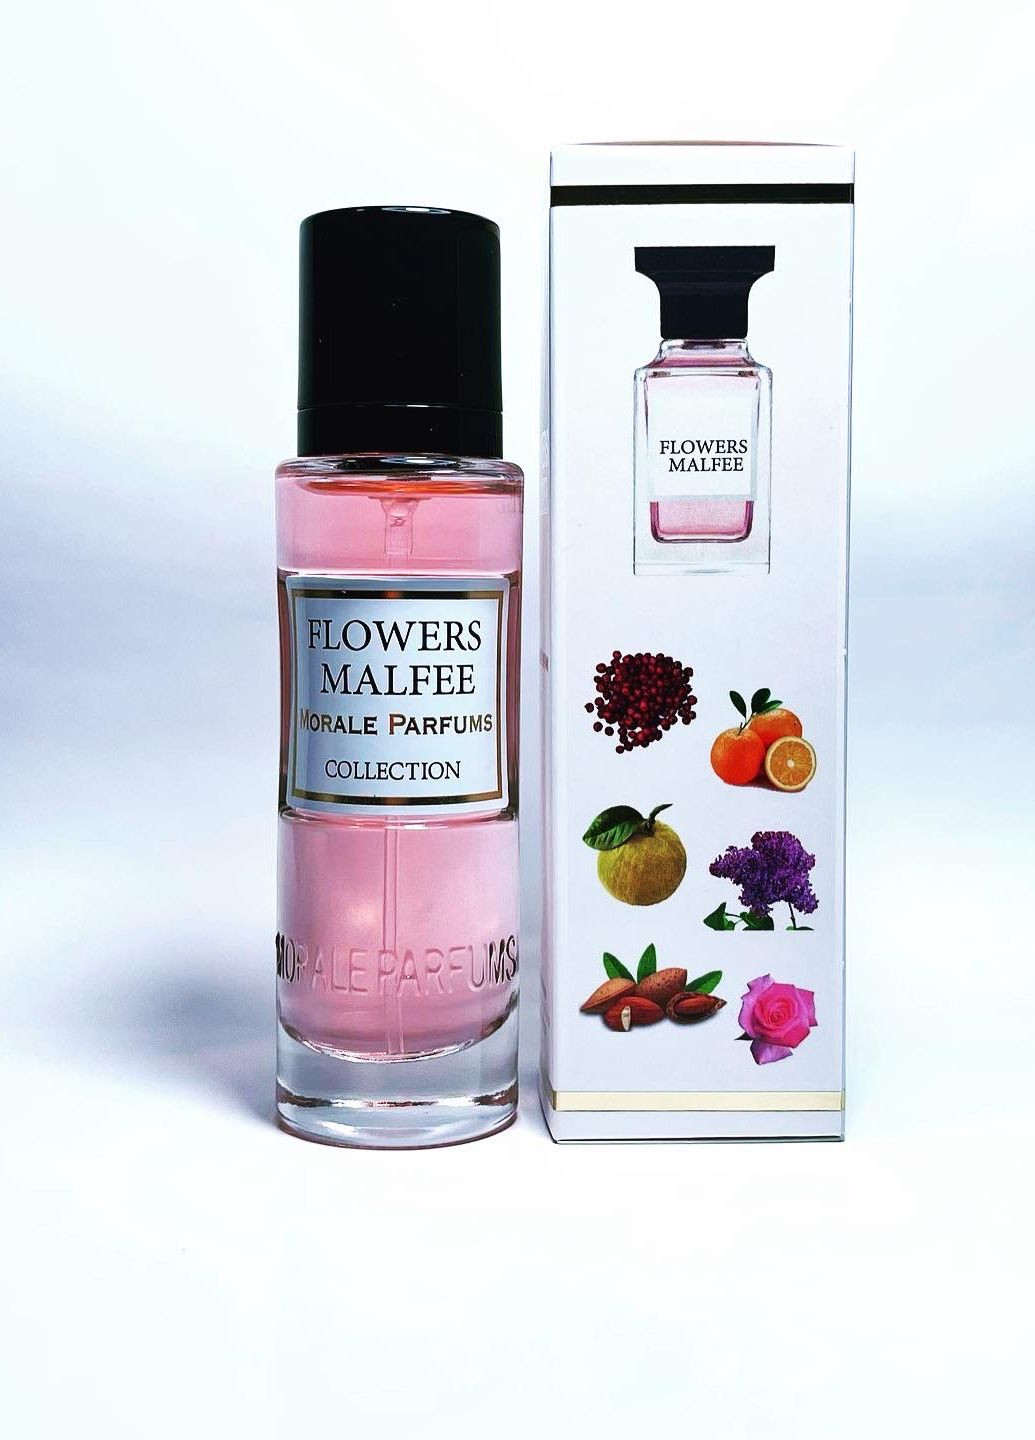 Парфюмерная вода FLOWERS MALFEE, 30мл Morale Parfums rose d'amalfi tom ford (276976296)